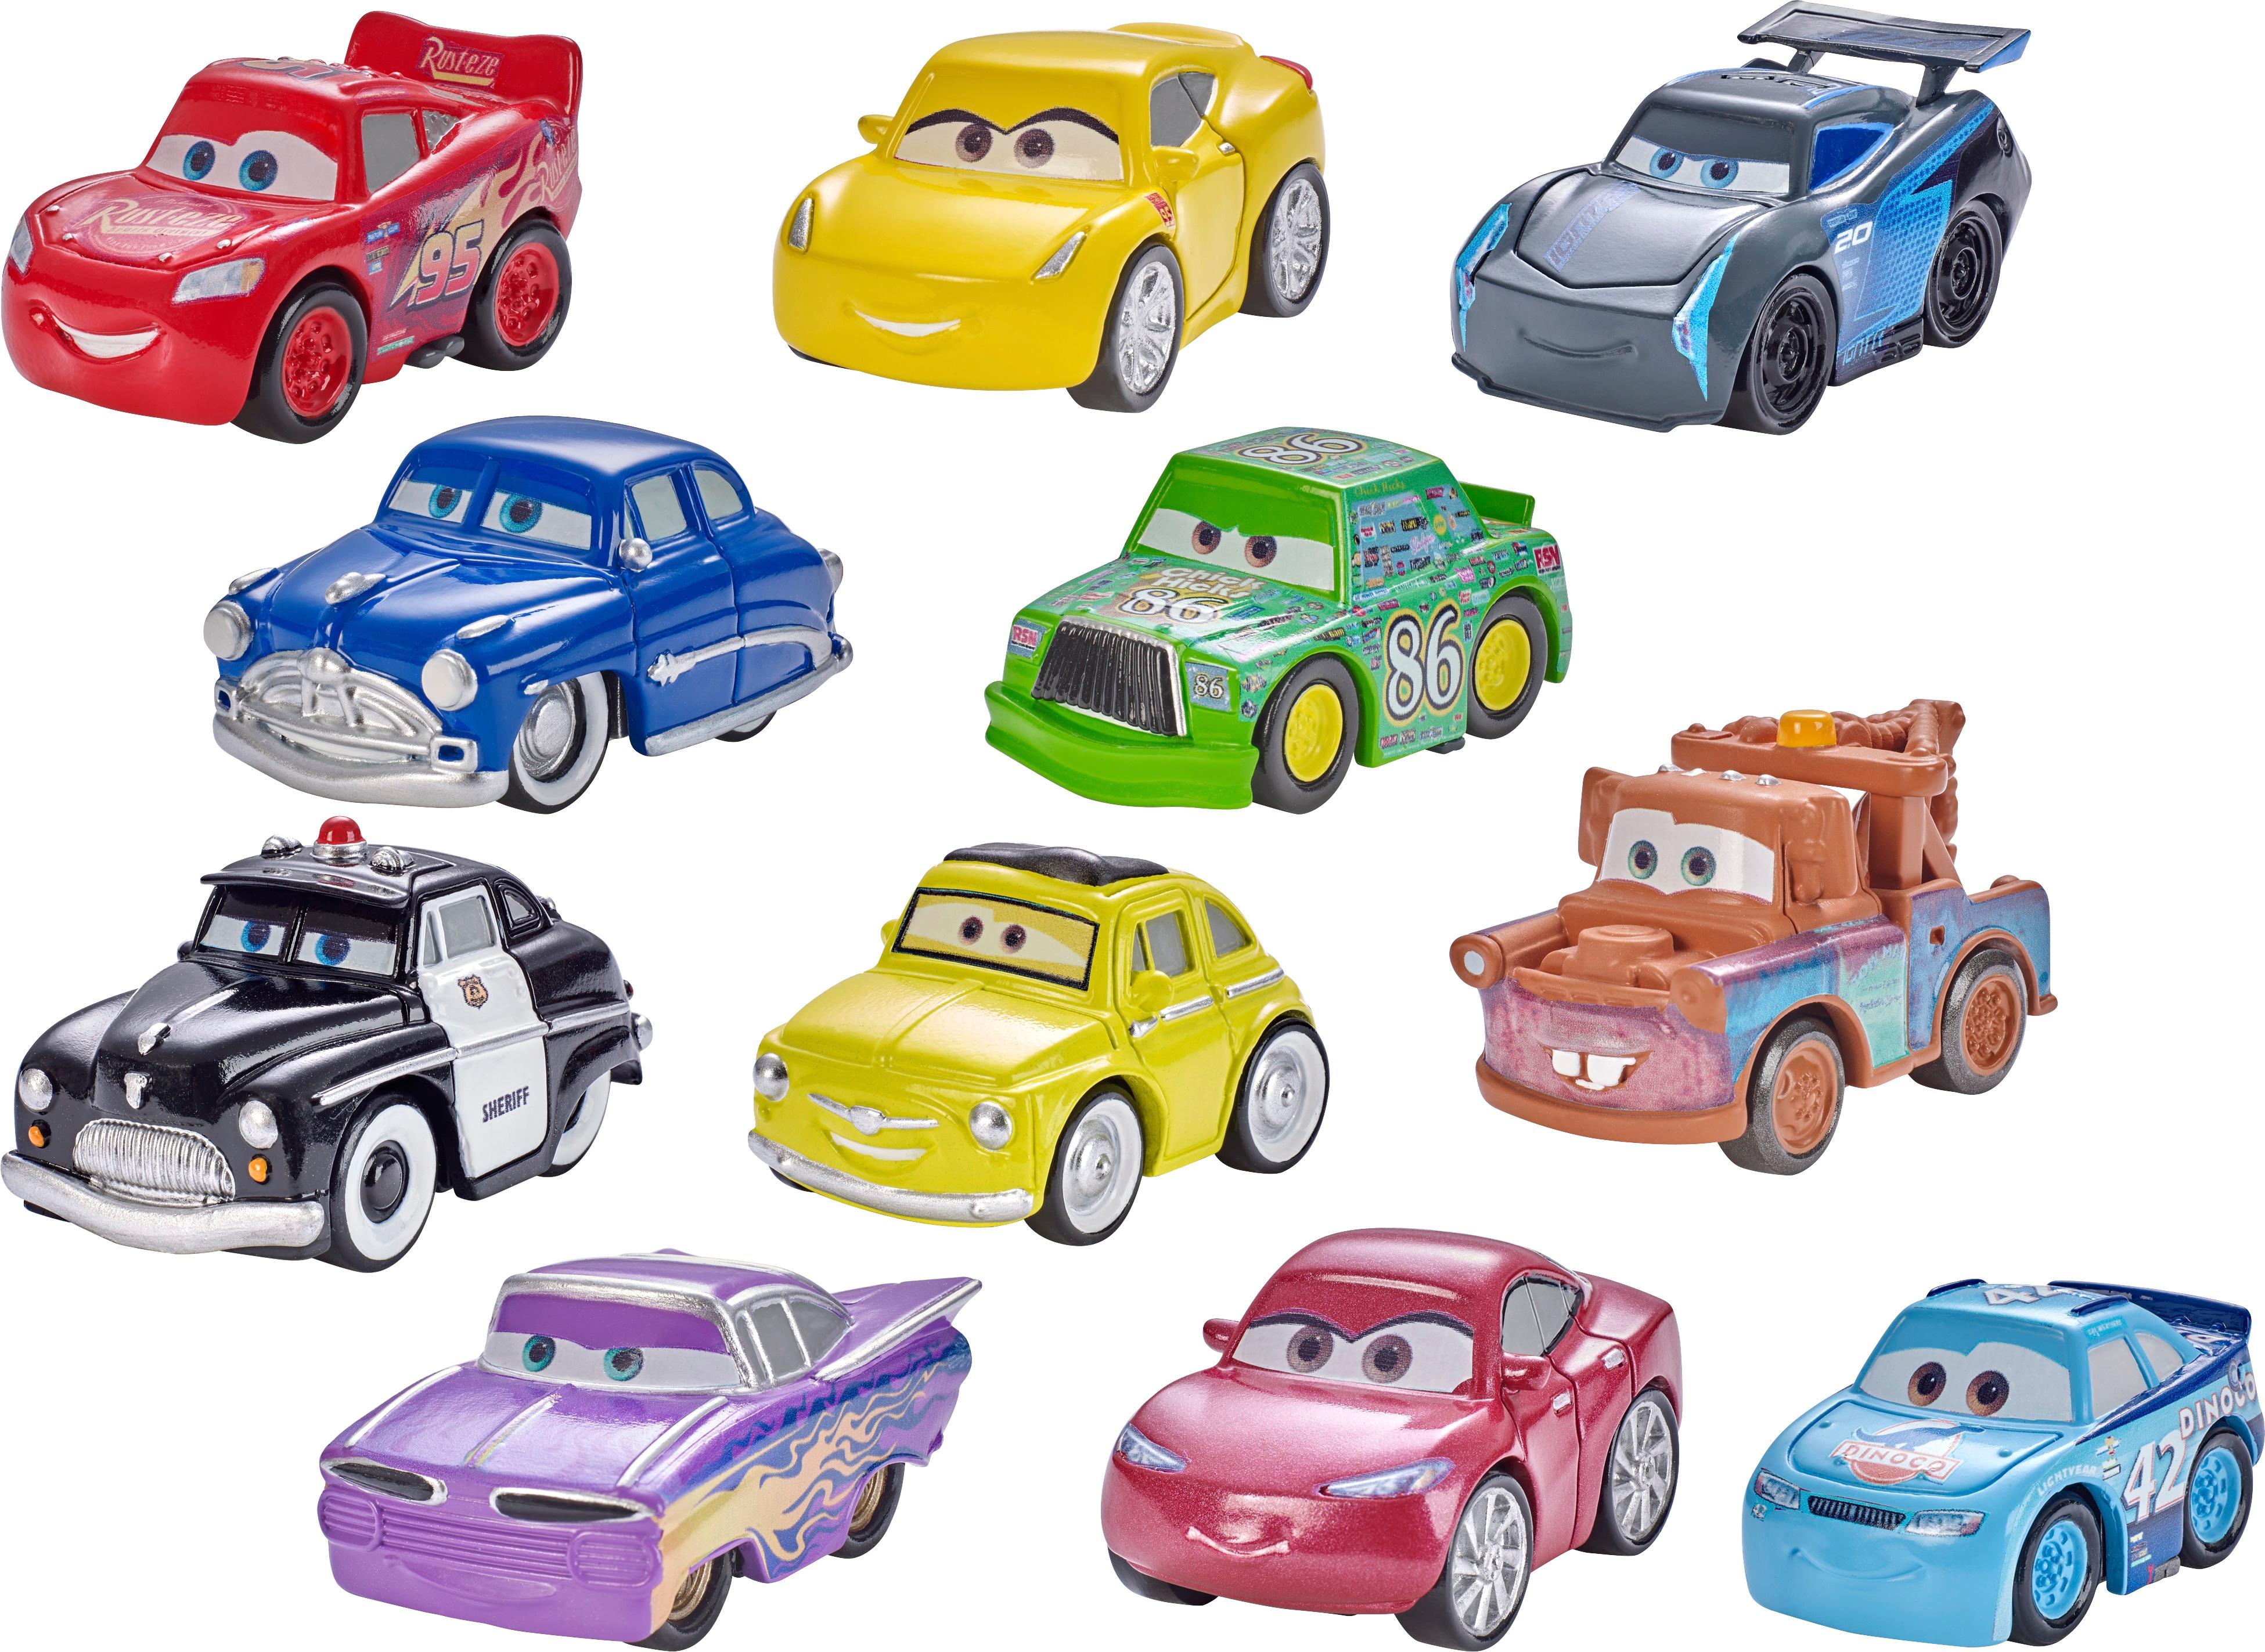 Disney Pixar Cars 3 Die-Cast 2-Pack Assortment - Toys To Love